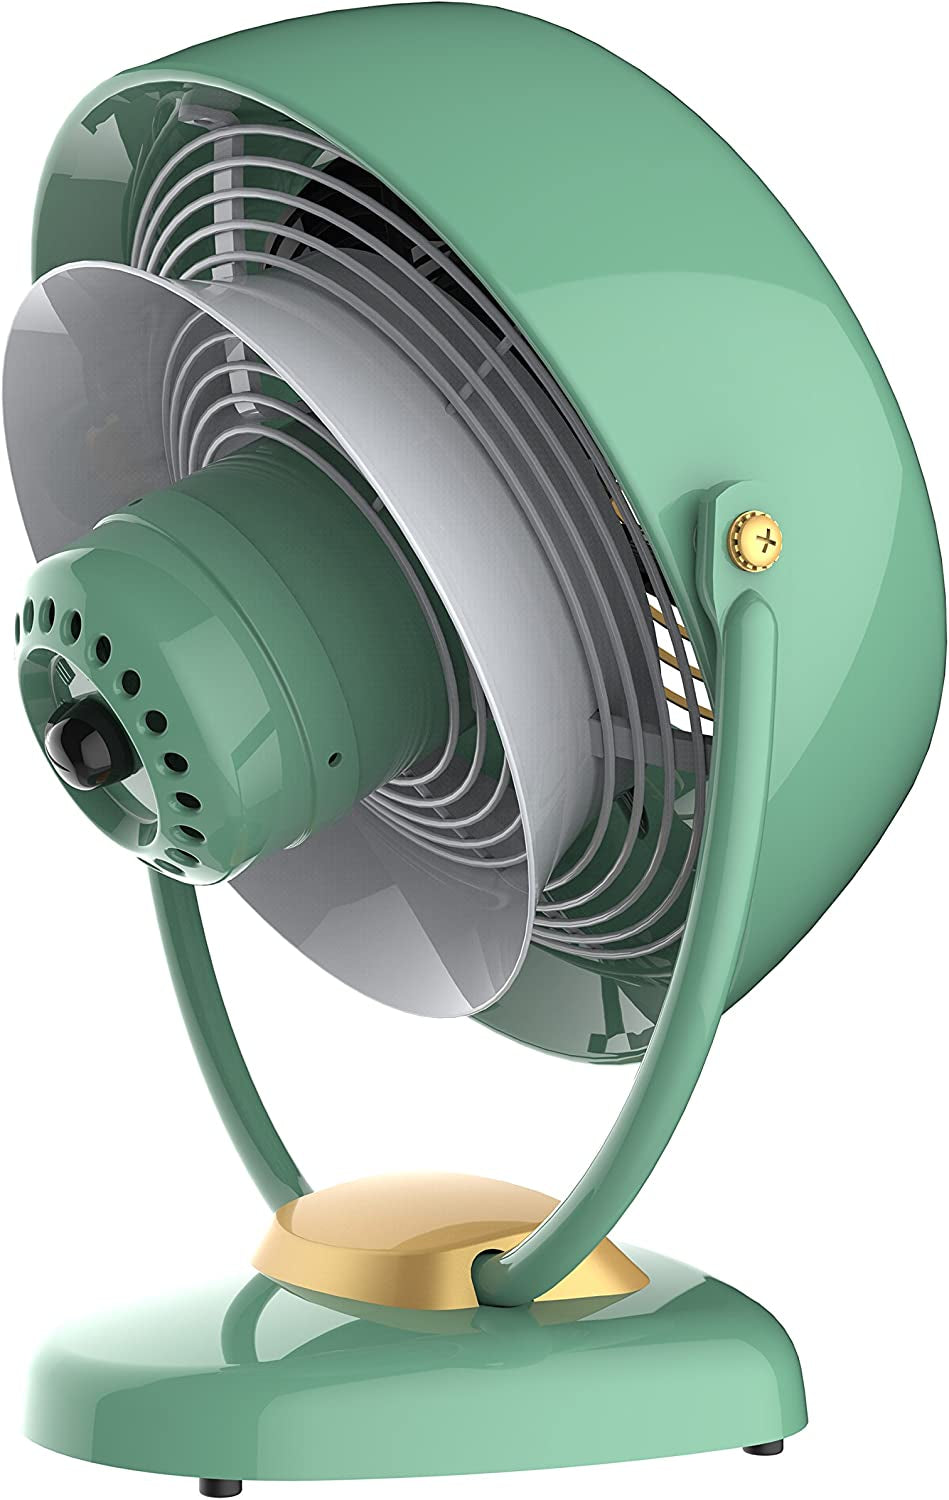 VFAN Sr. Vintage Air Circulator Fan, Green